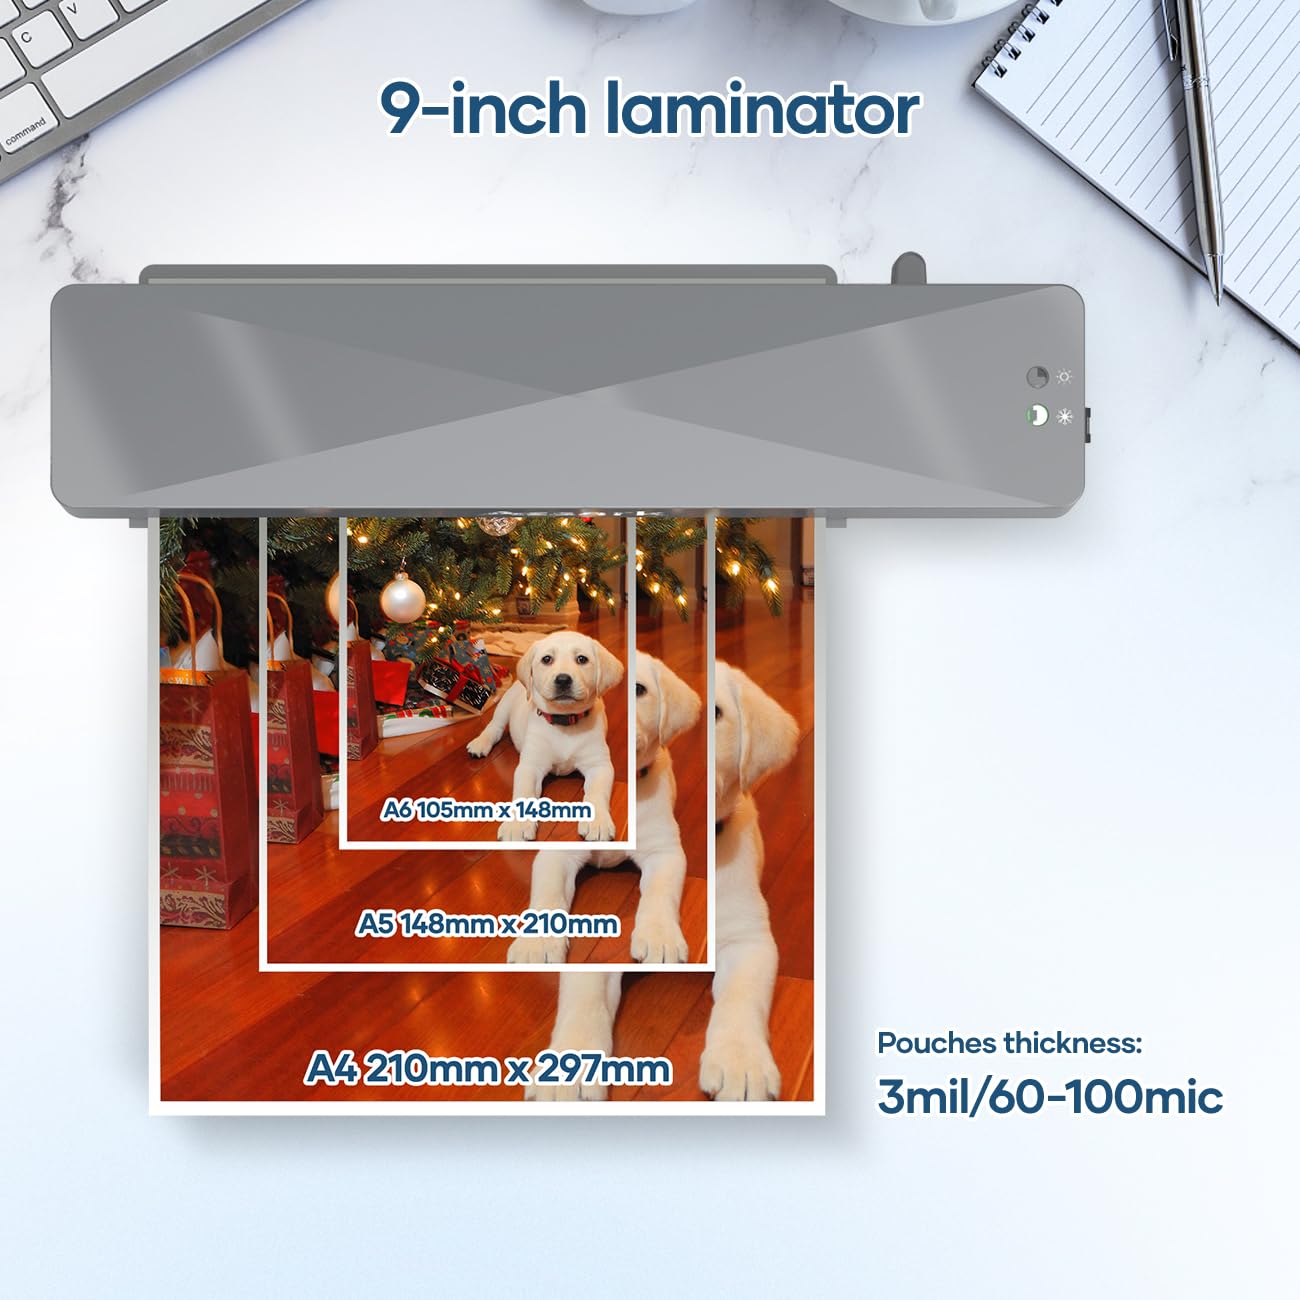 Assark Laminator, A4 Laminator Machine, 9 Inch Thermal Laminator, Personal Laminator Teachers, Hot & Cold Laminator with Laminating Sheets 9 PCS for Home Office School Use